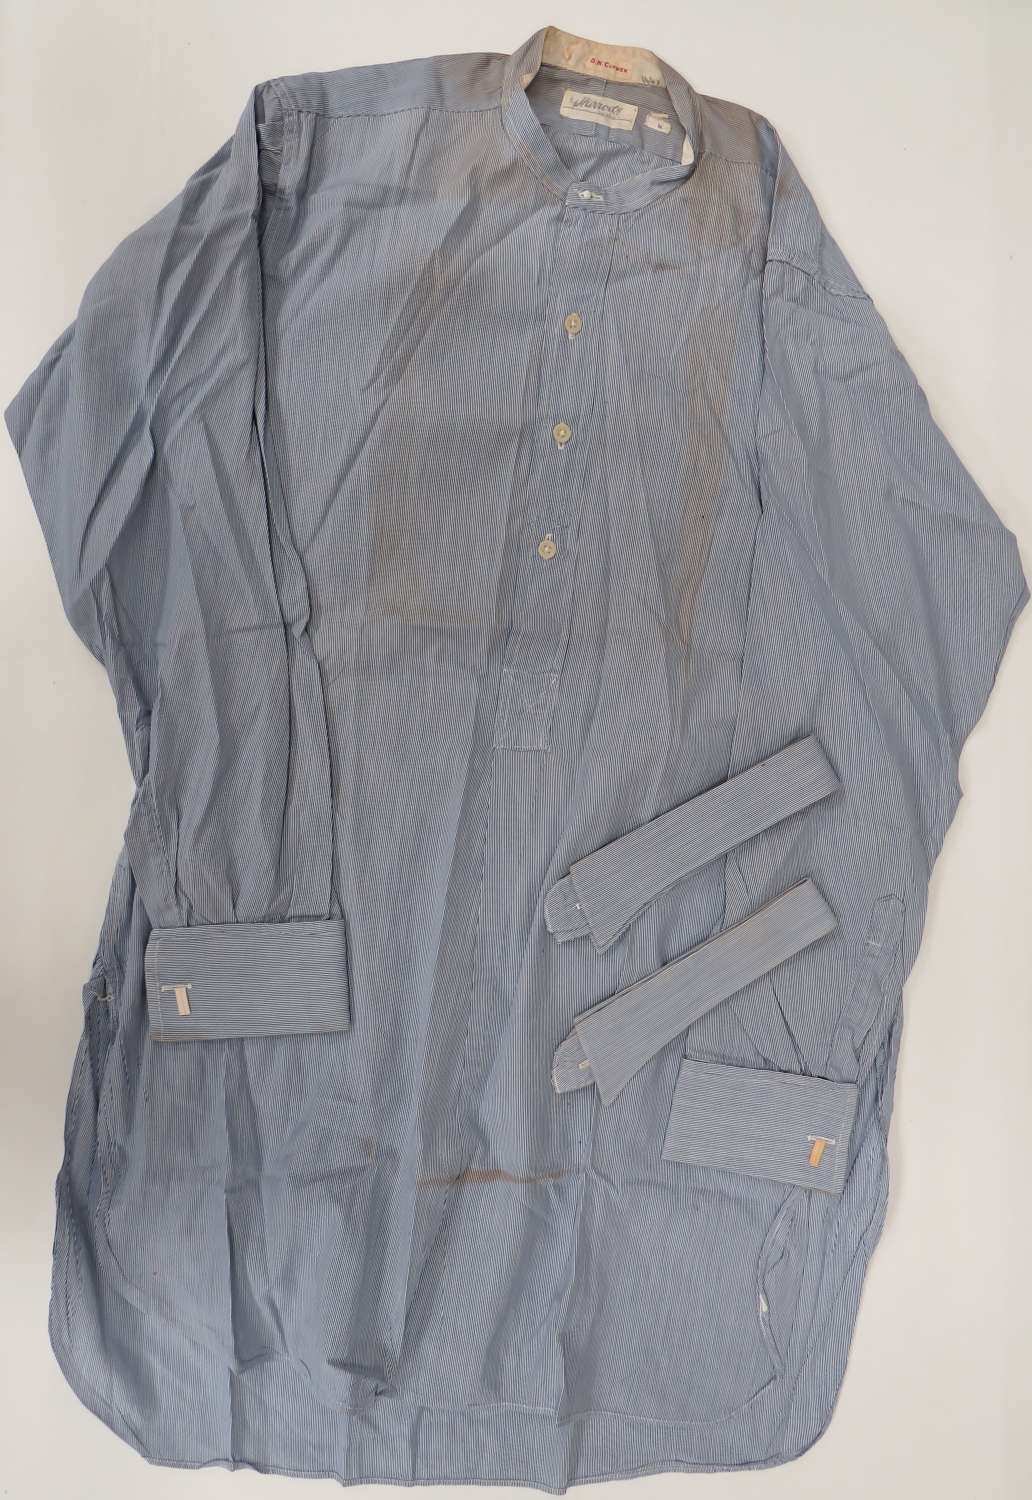 Interwar R.A.F / Civilian Blue Collarless Shirt and loose collars